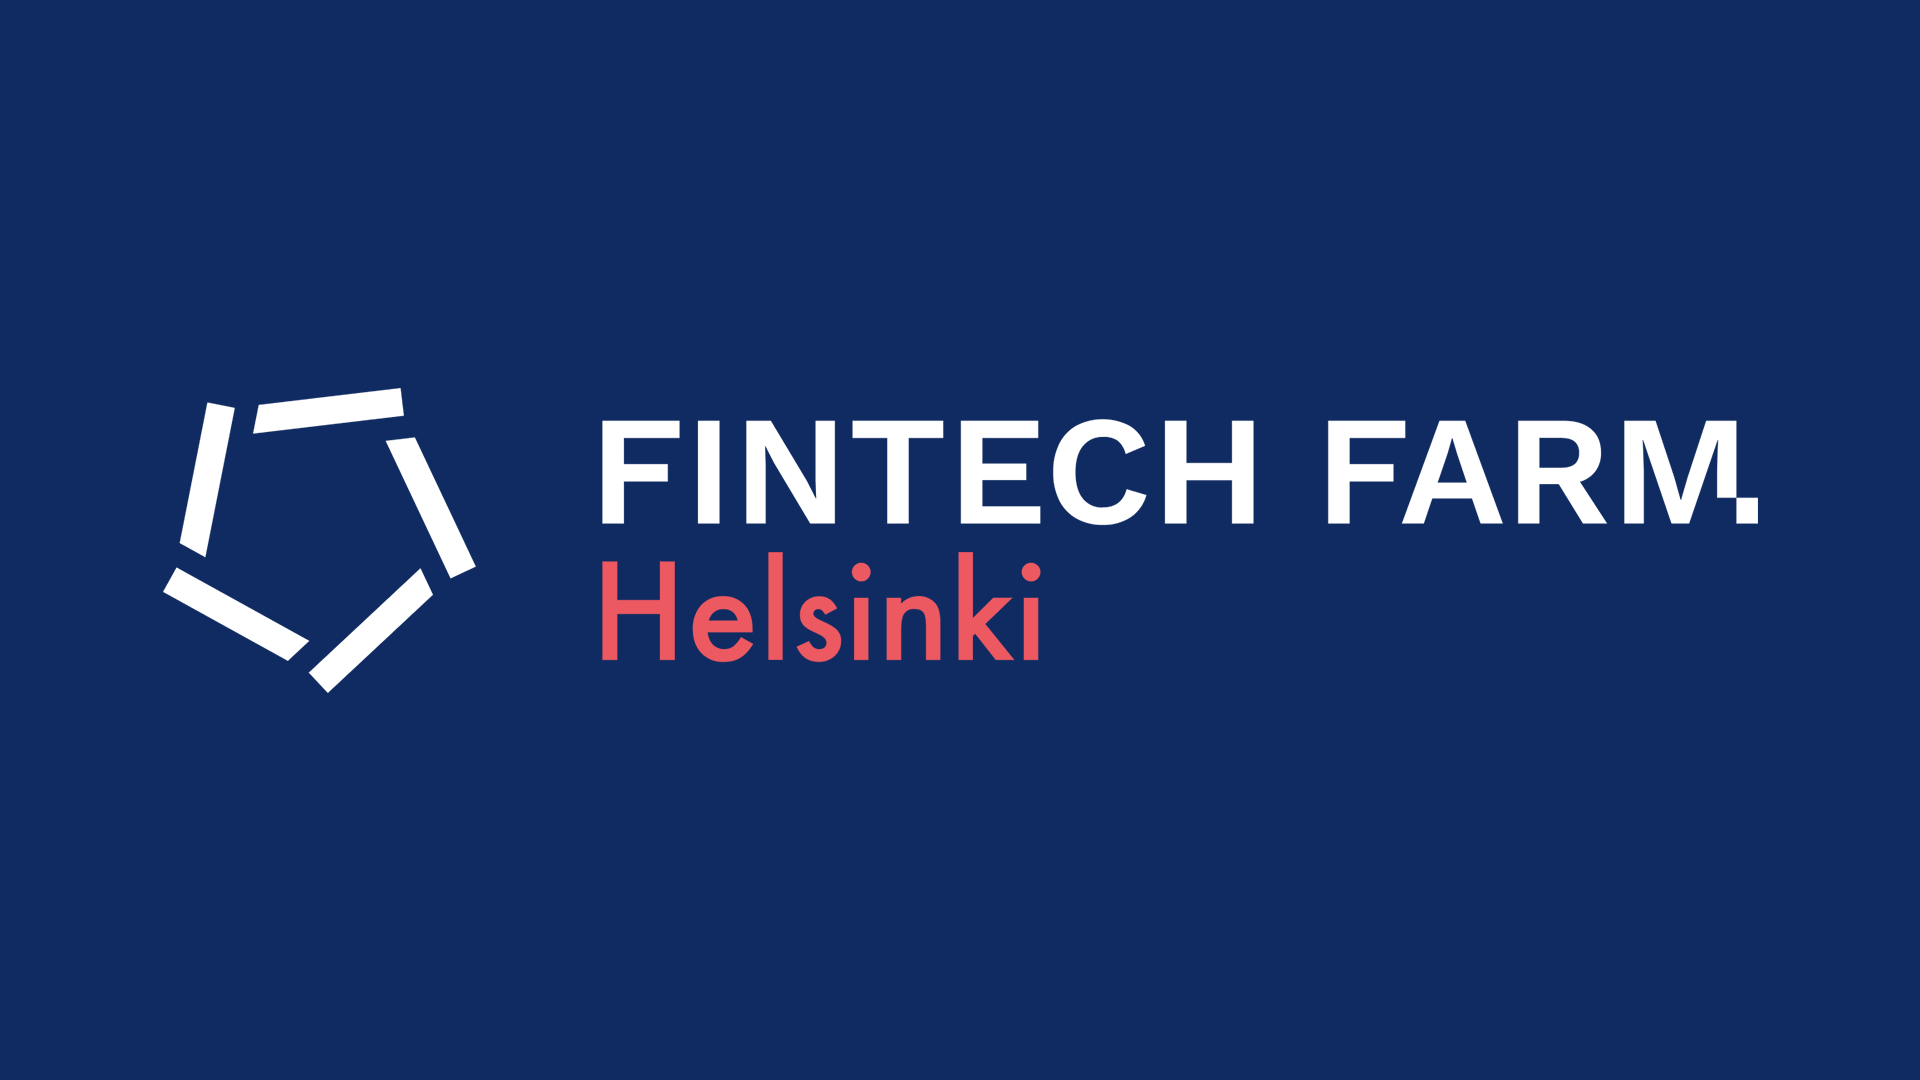 The Fintech and Finance Innovation Hub of Finland | Helsinki Fintech Farm